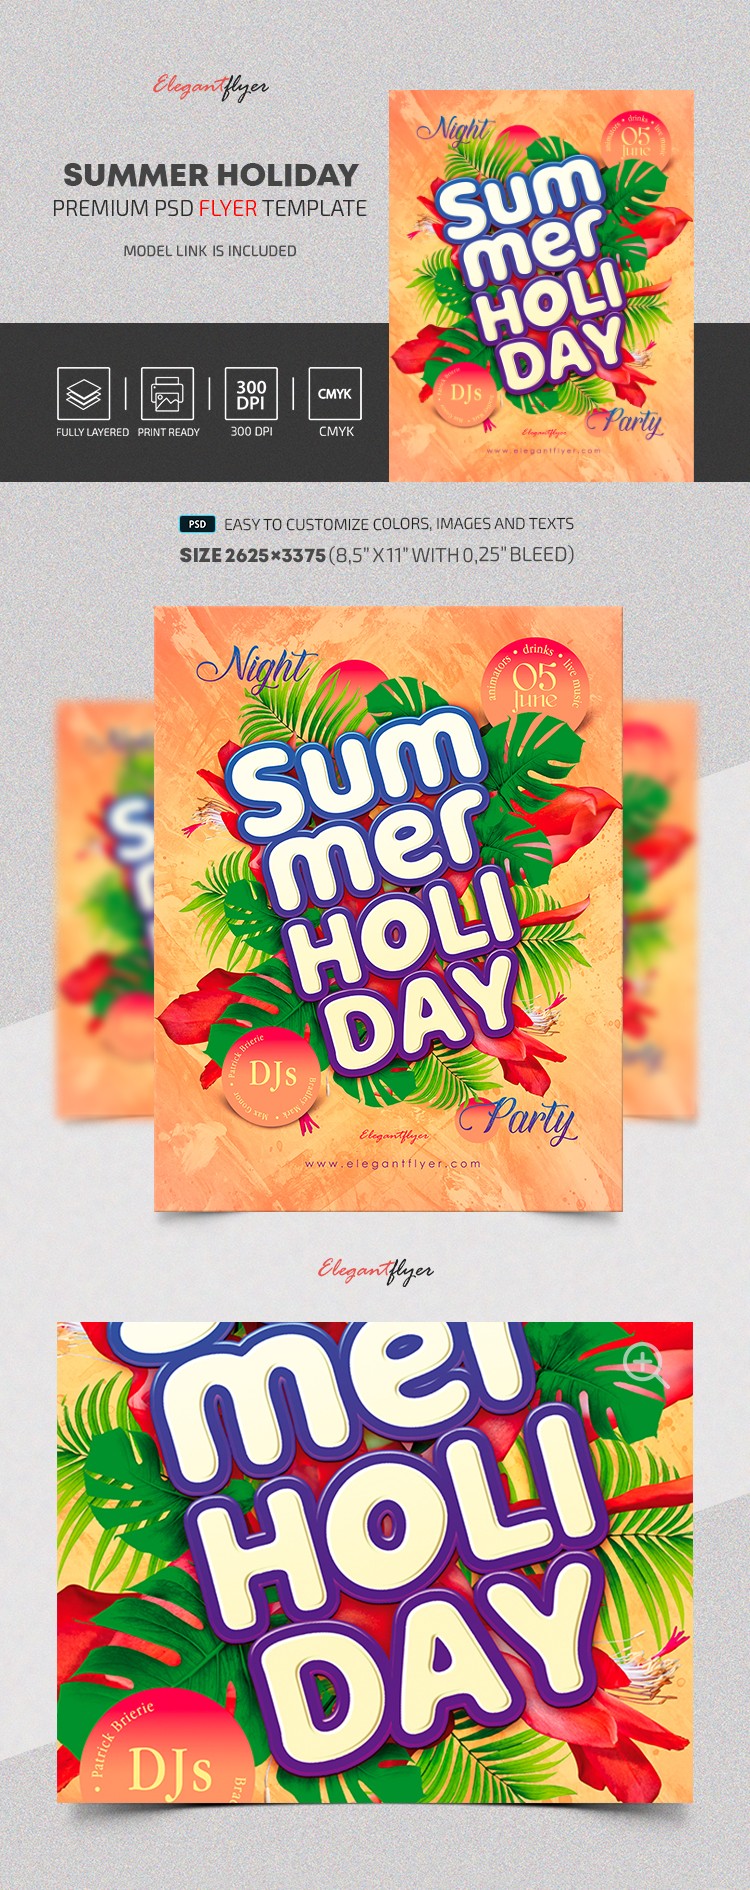 Summer Holiday Flyer by ElegantFlyer